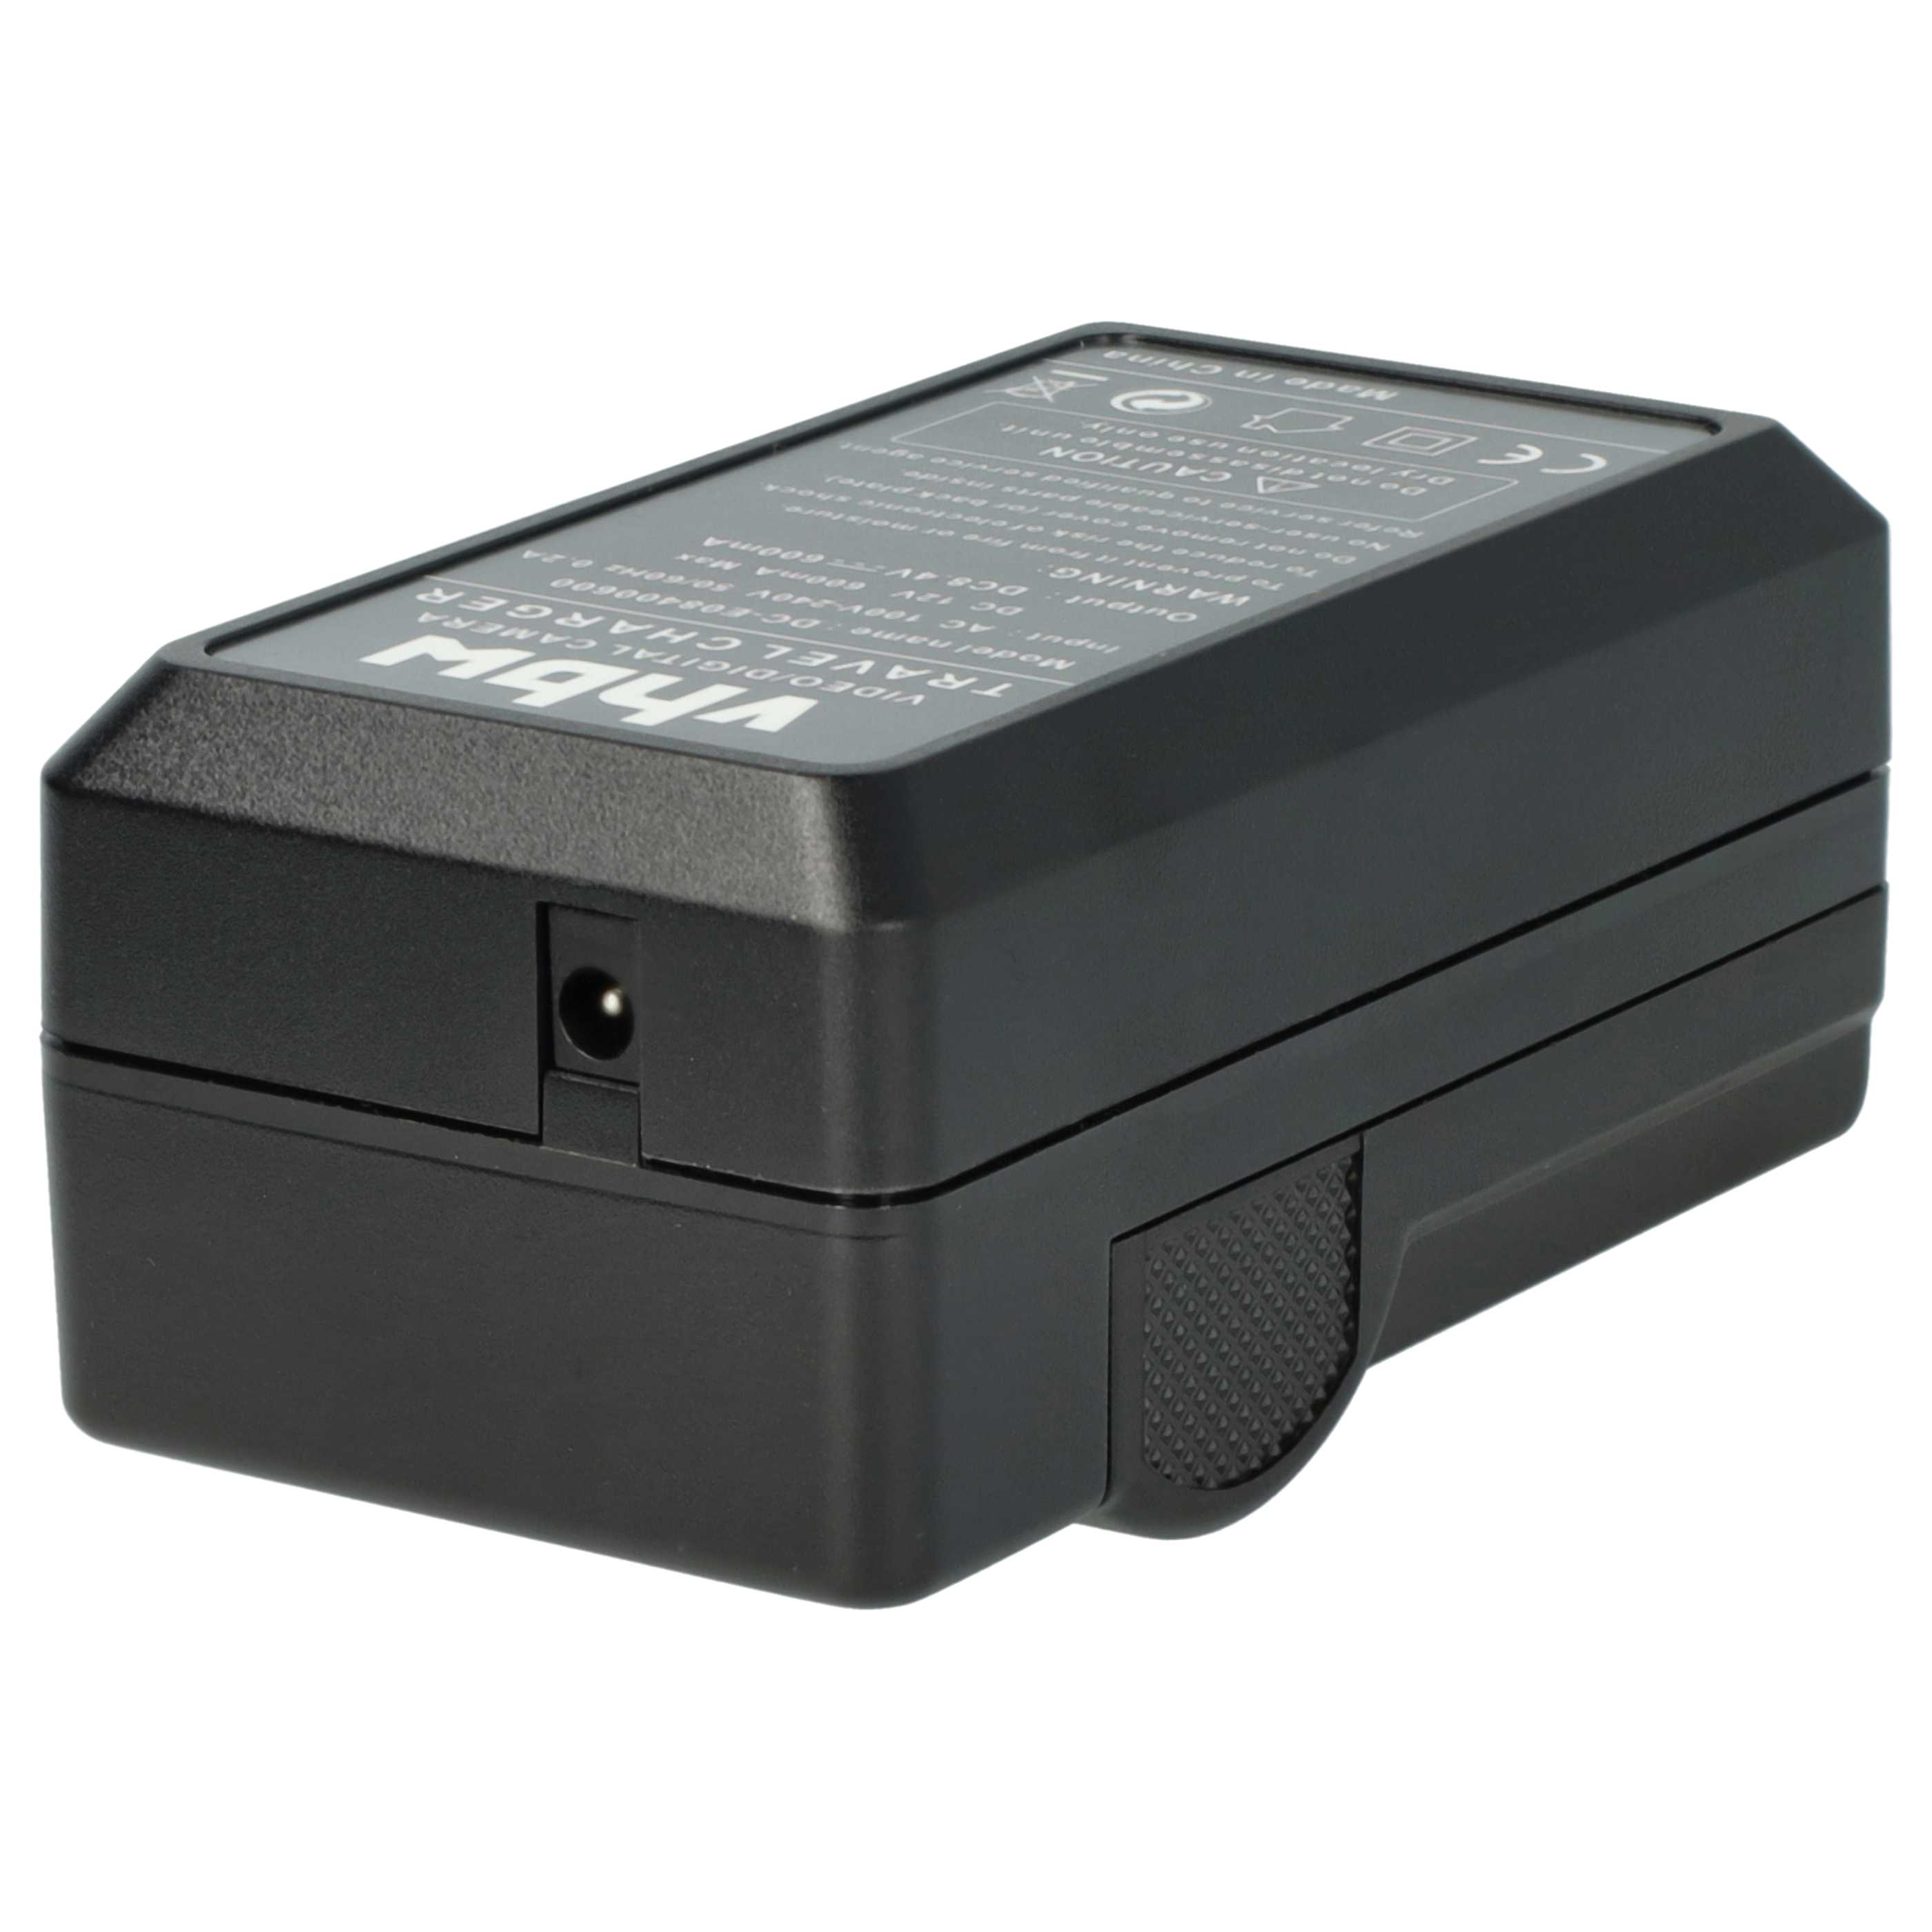 Ładowarka do aparatu Canon LP-E8 i innych - ładowarka akumulatora 0,6 A, 8,4 V